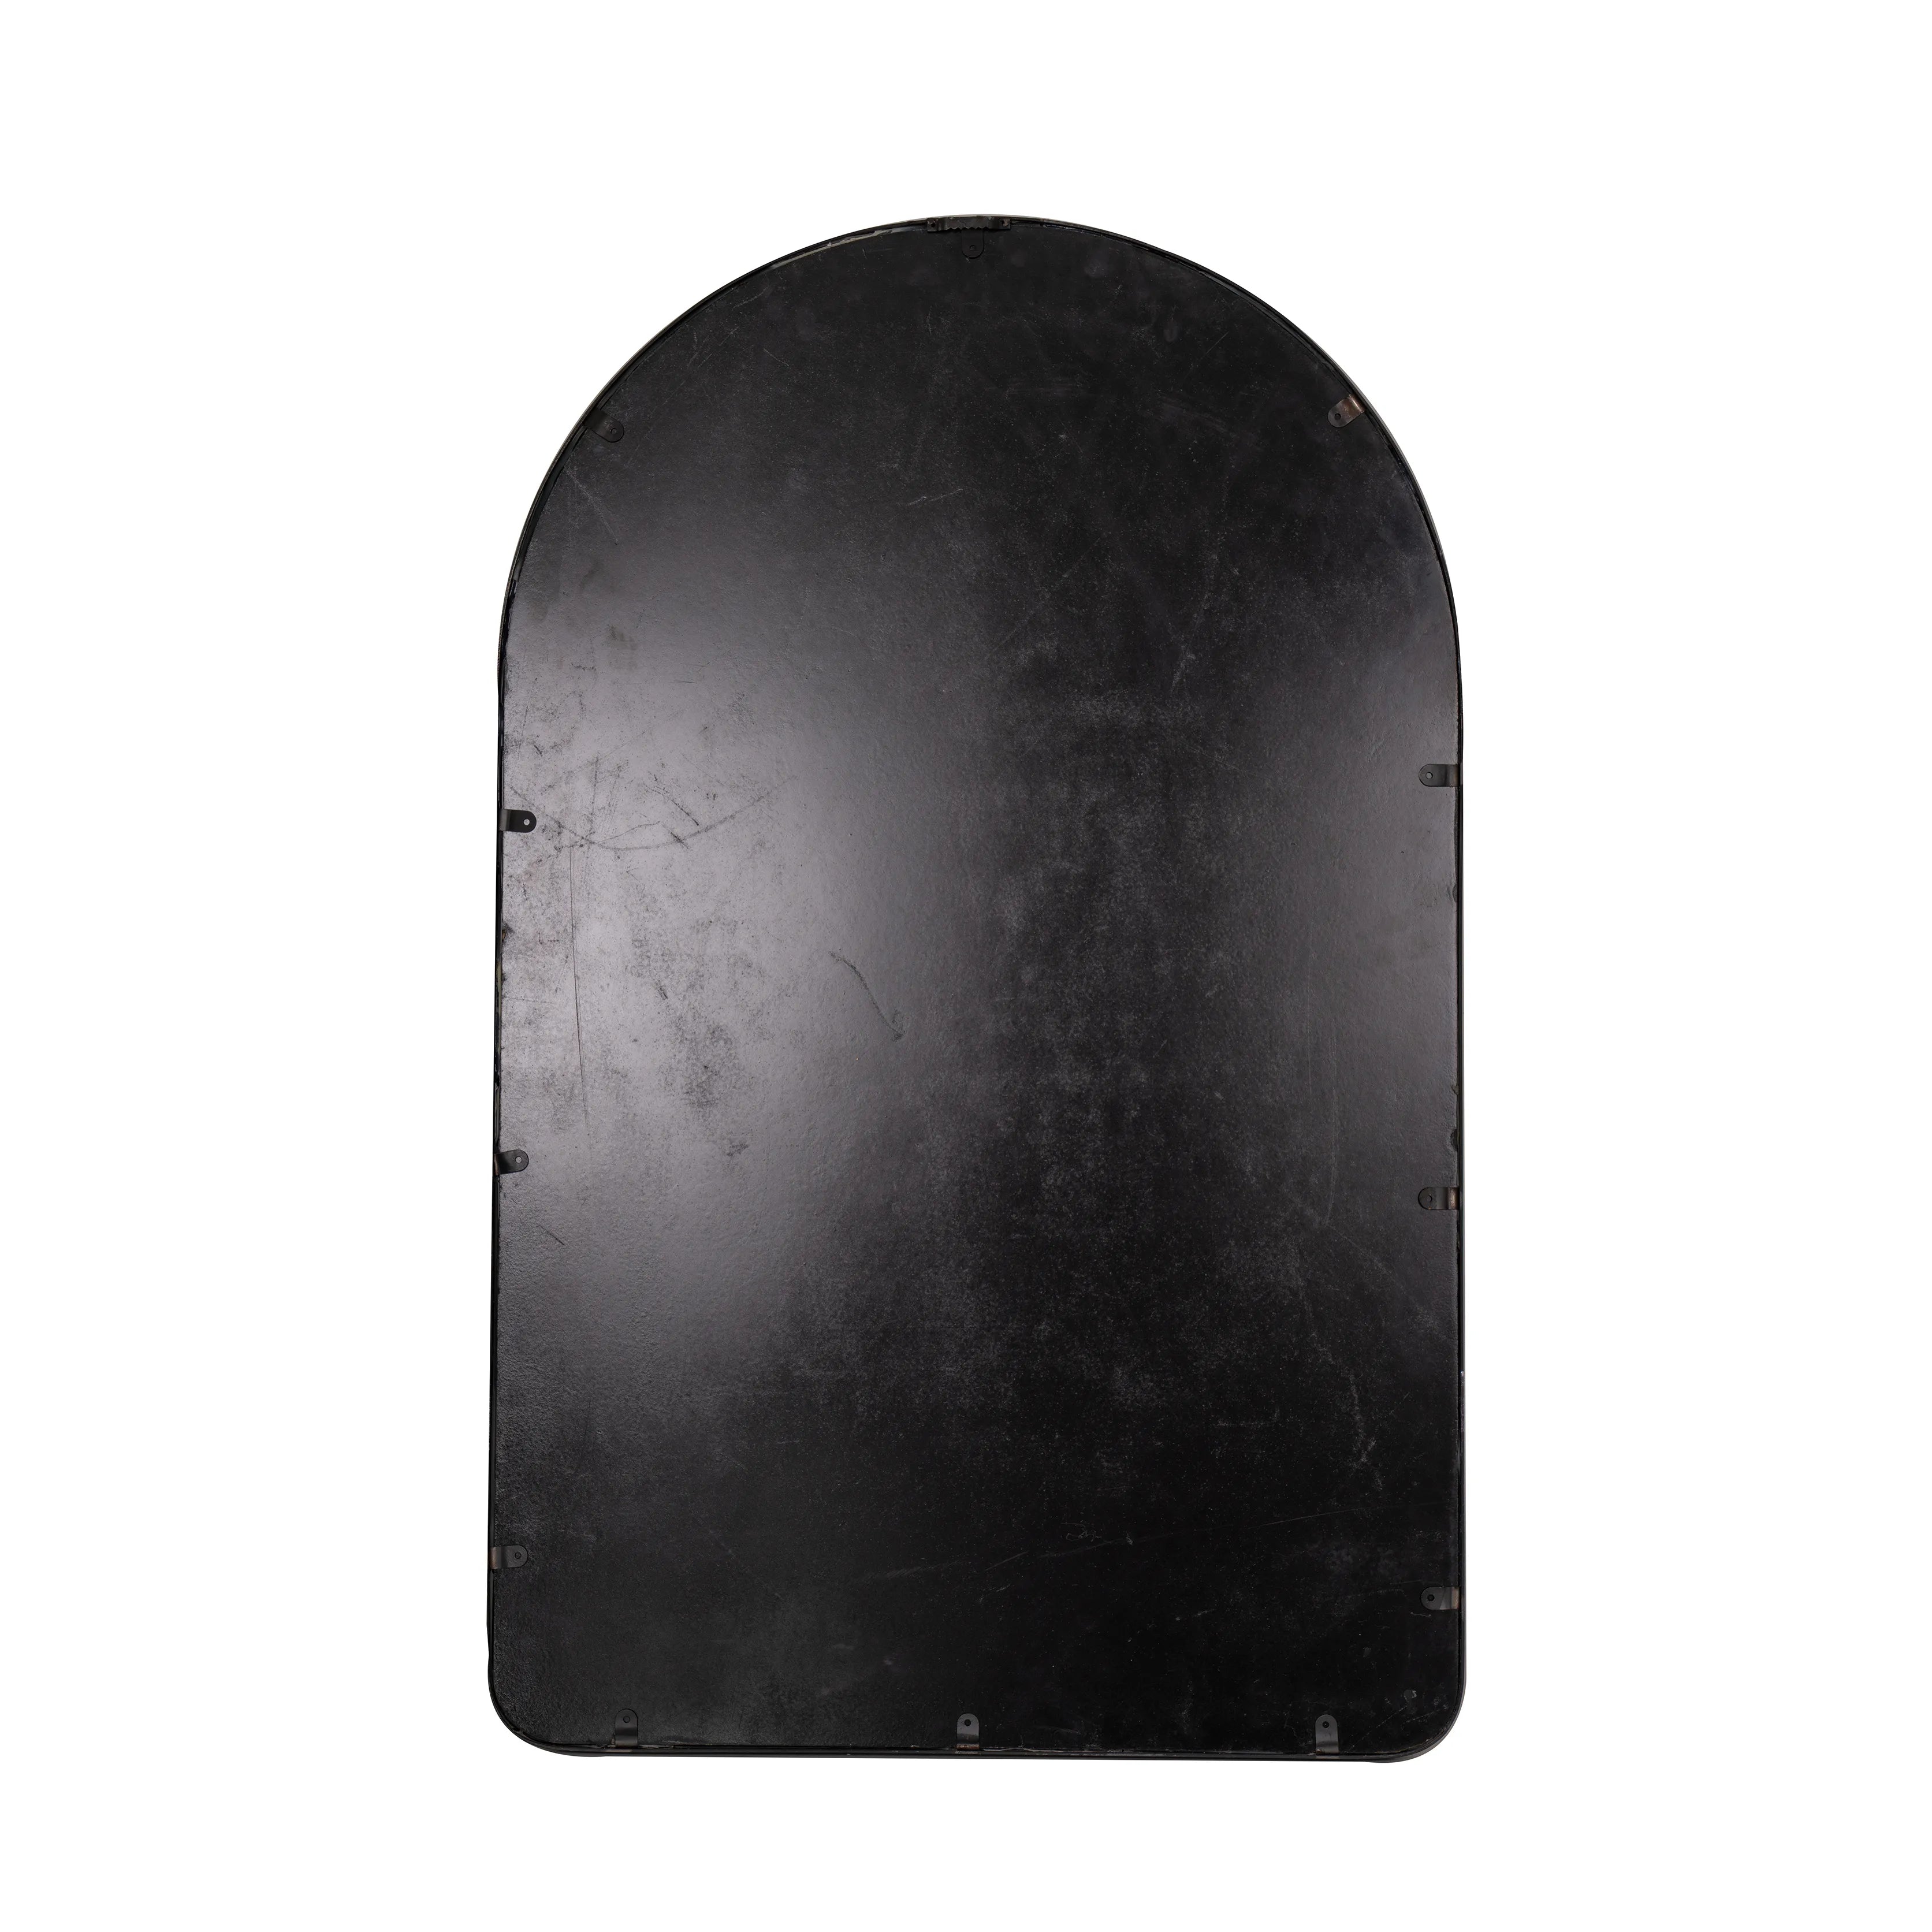 Sebastian Arched Wall Mirror- Black